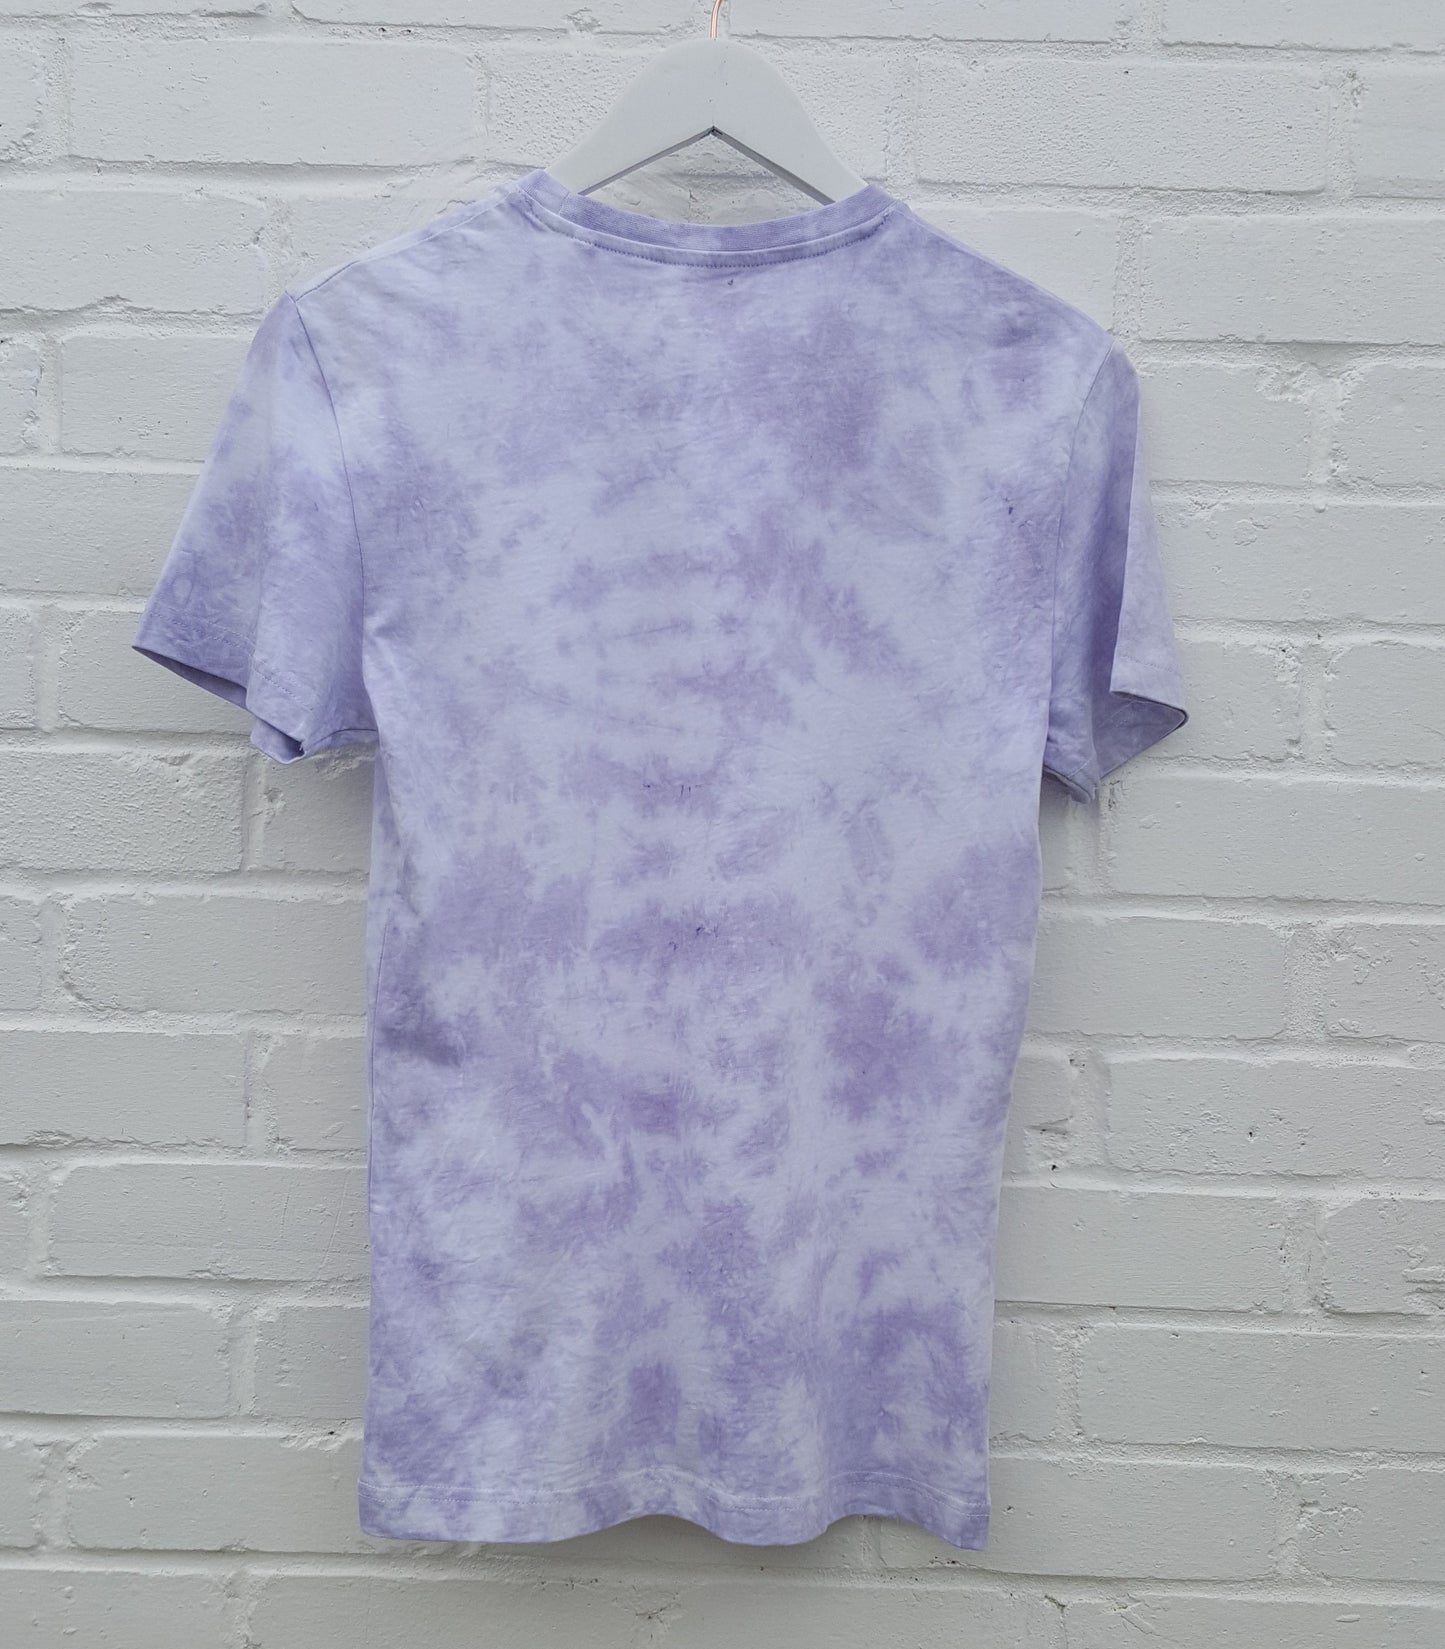 Lilac Ethical Men's T-shirt Tie Dye size S